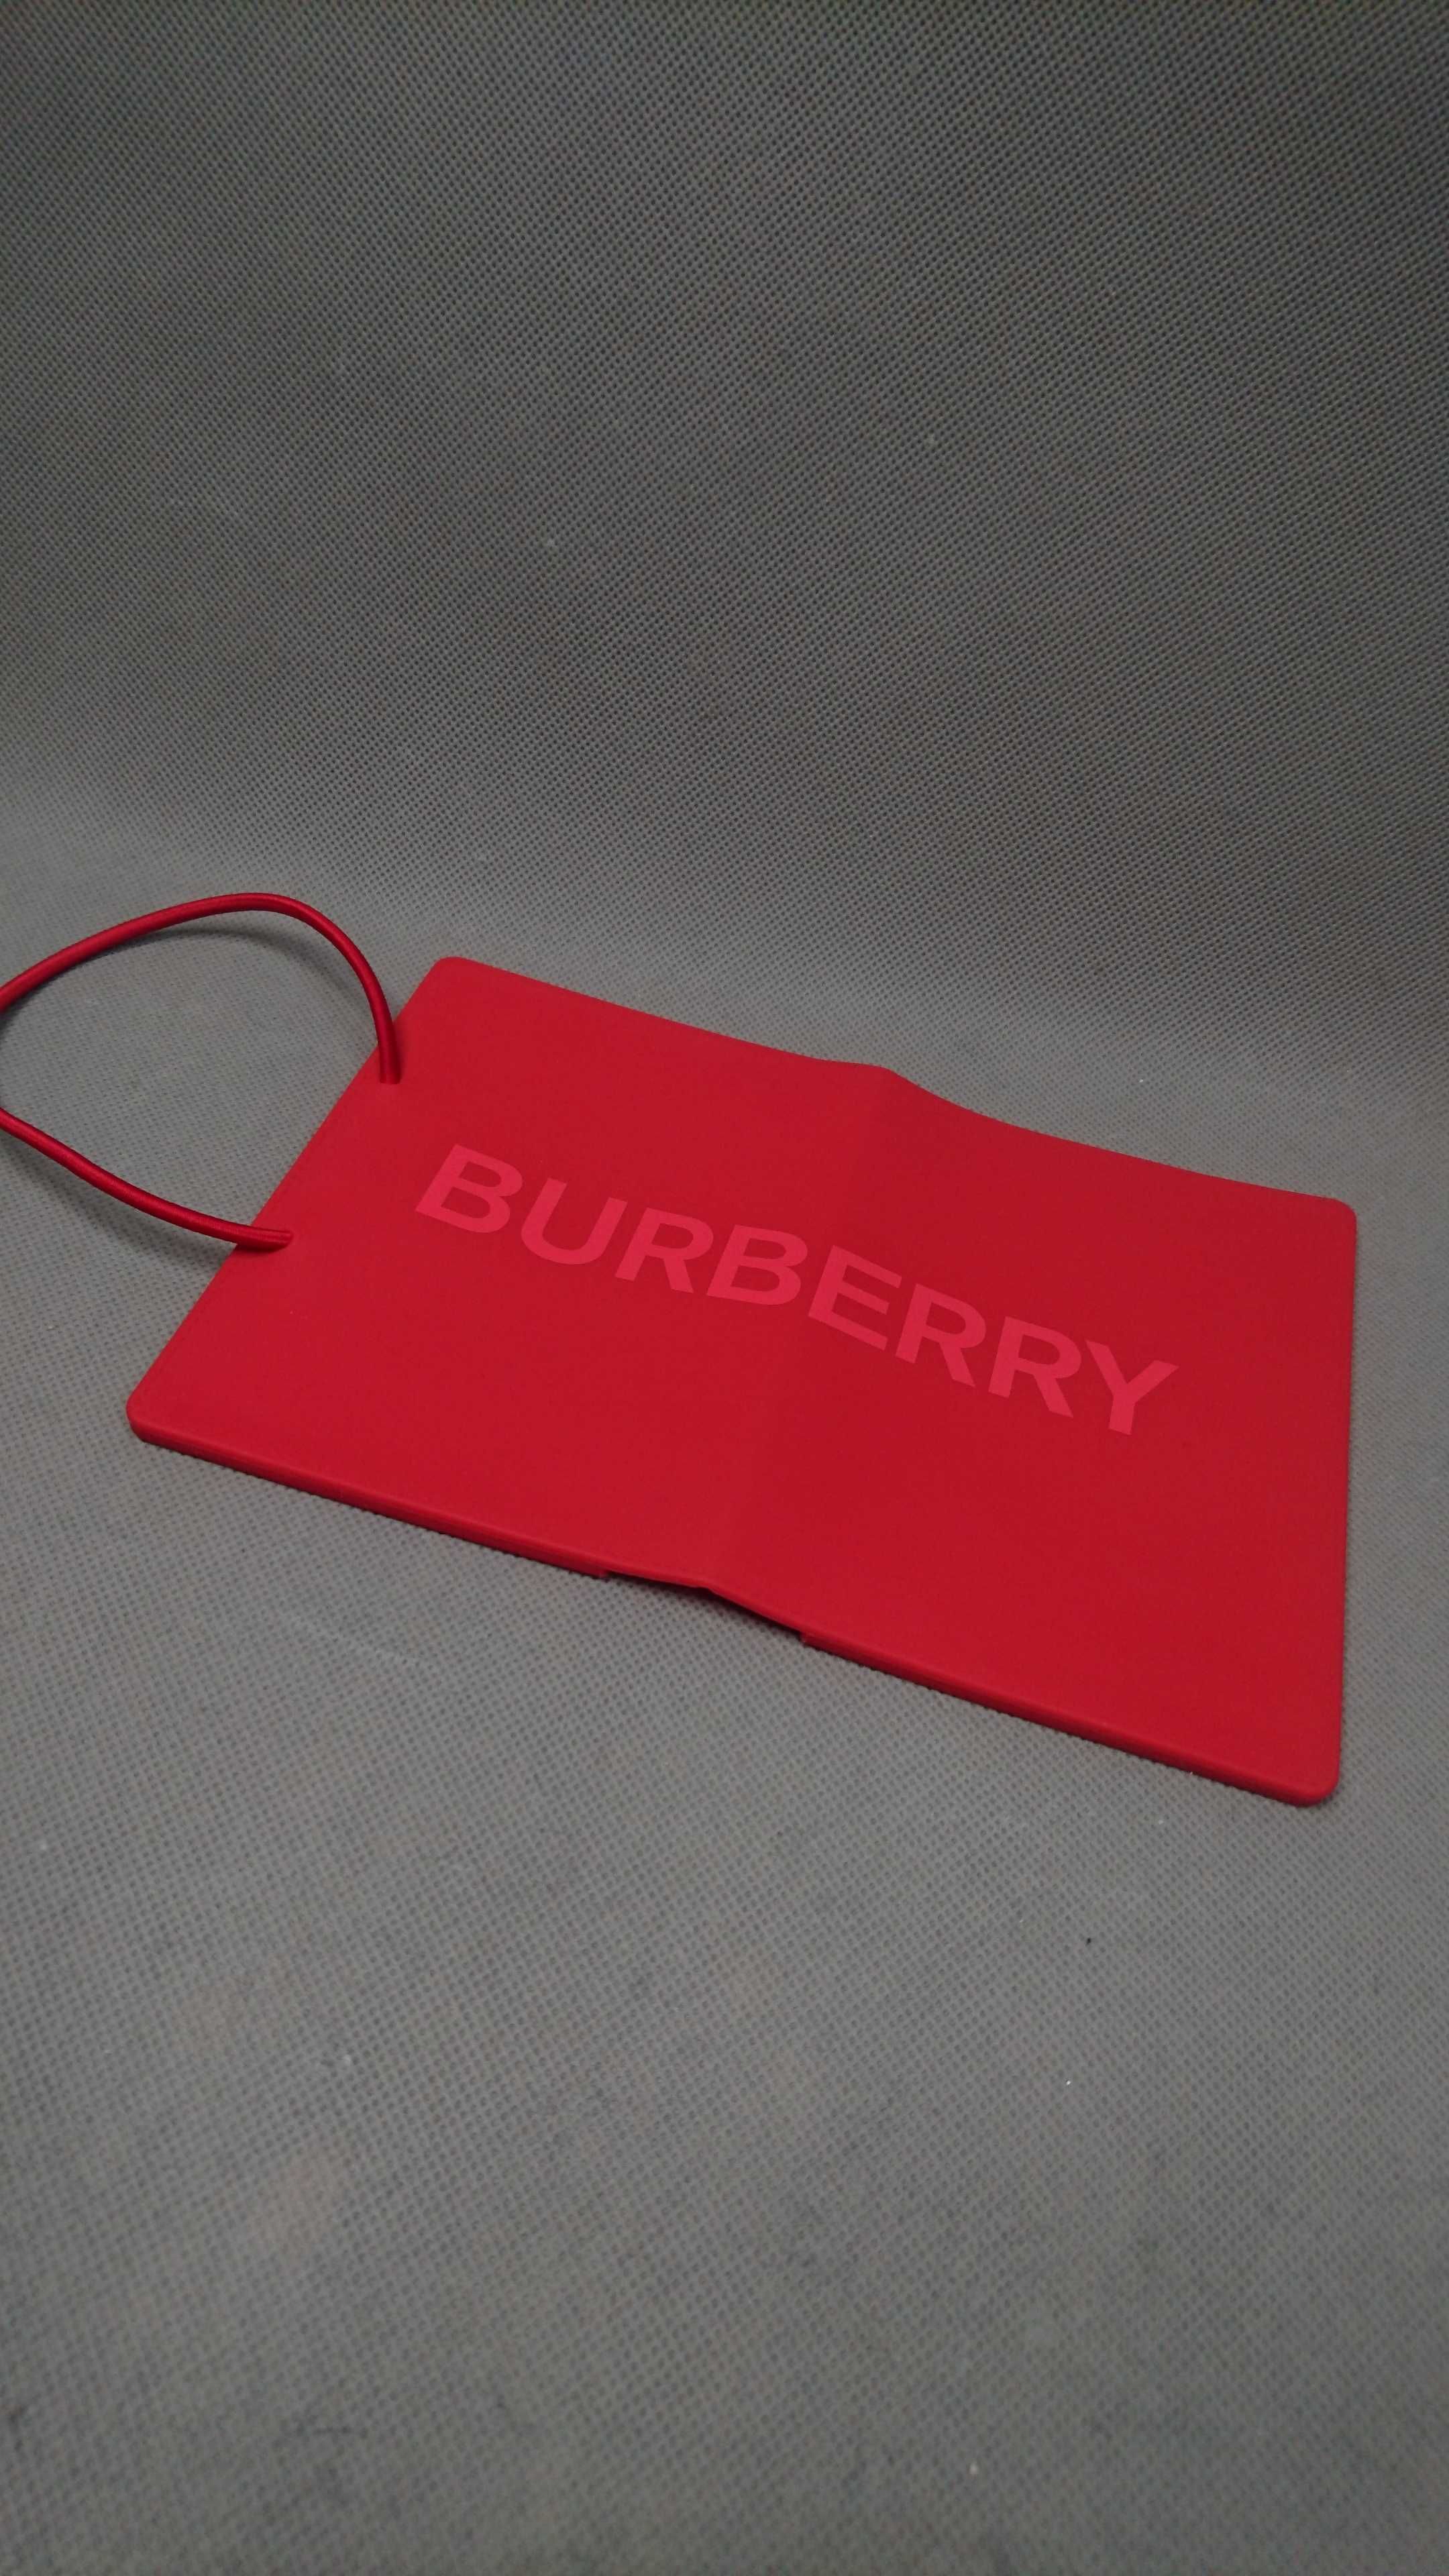 Burberry Passport Holder Red Cardholder